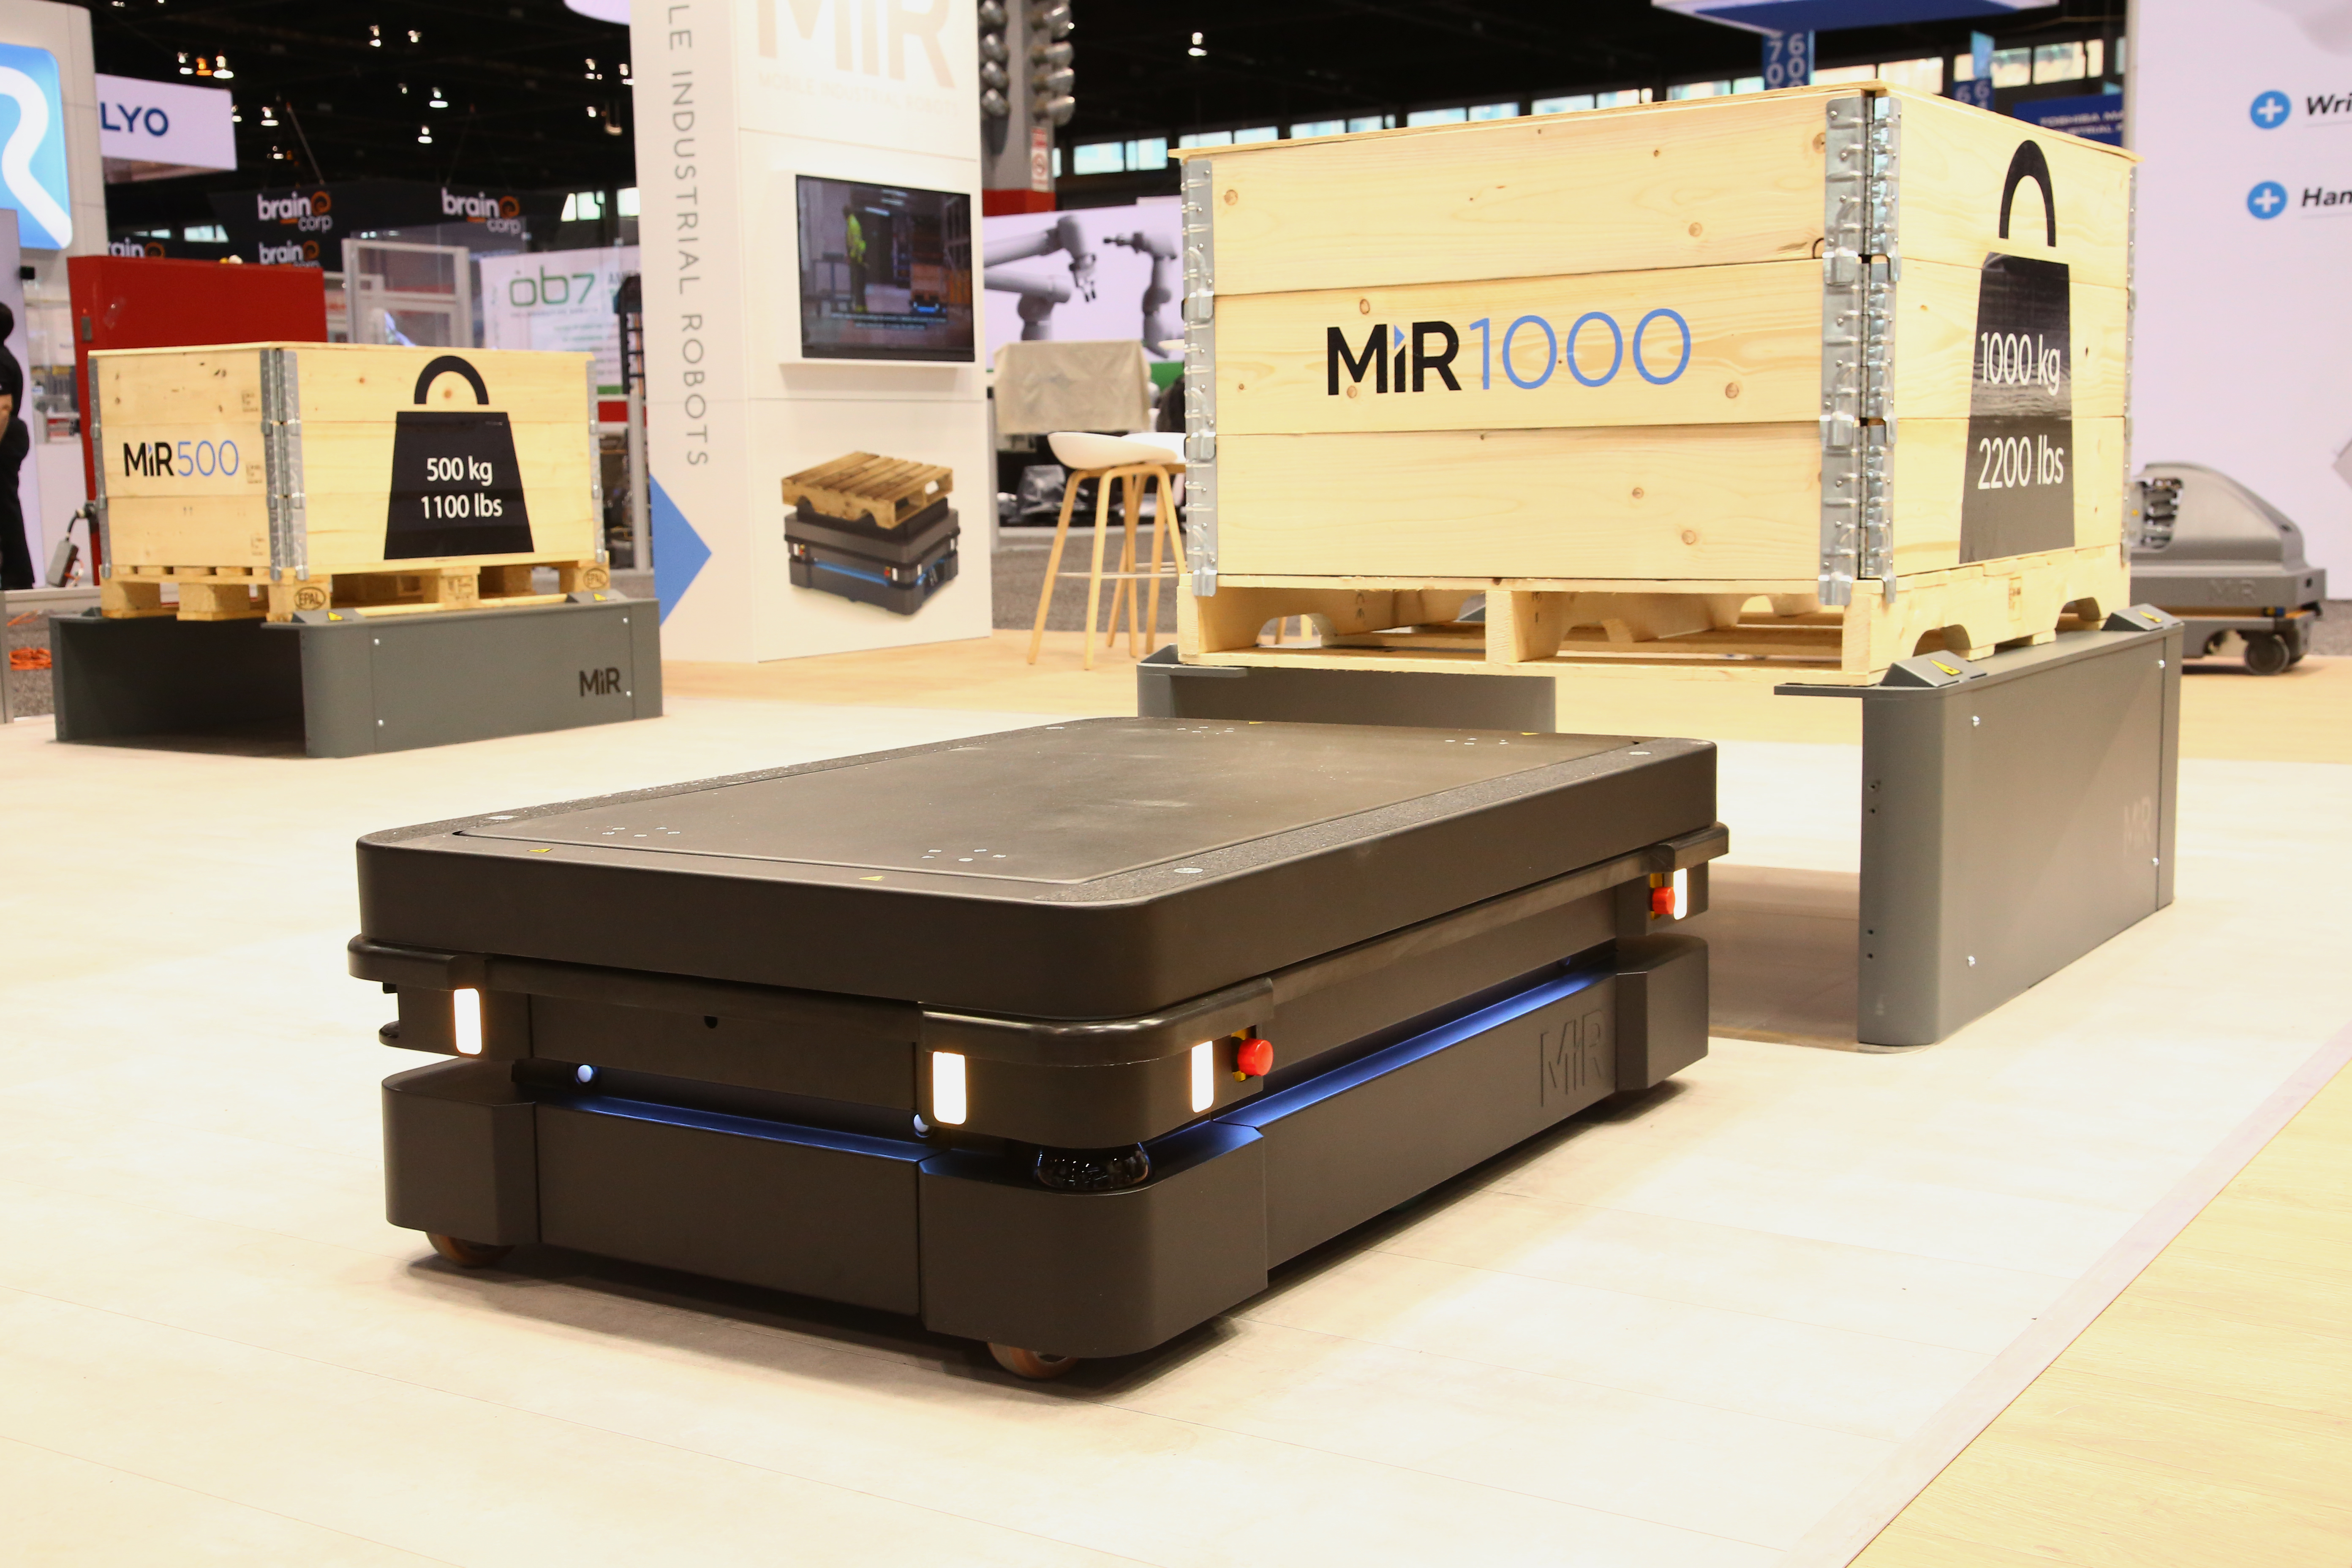 MiR1000 mobile robot ProMat 2019